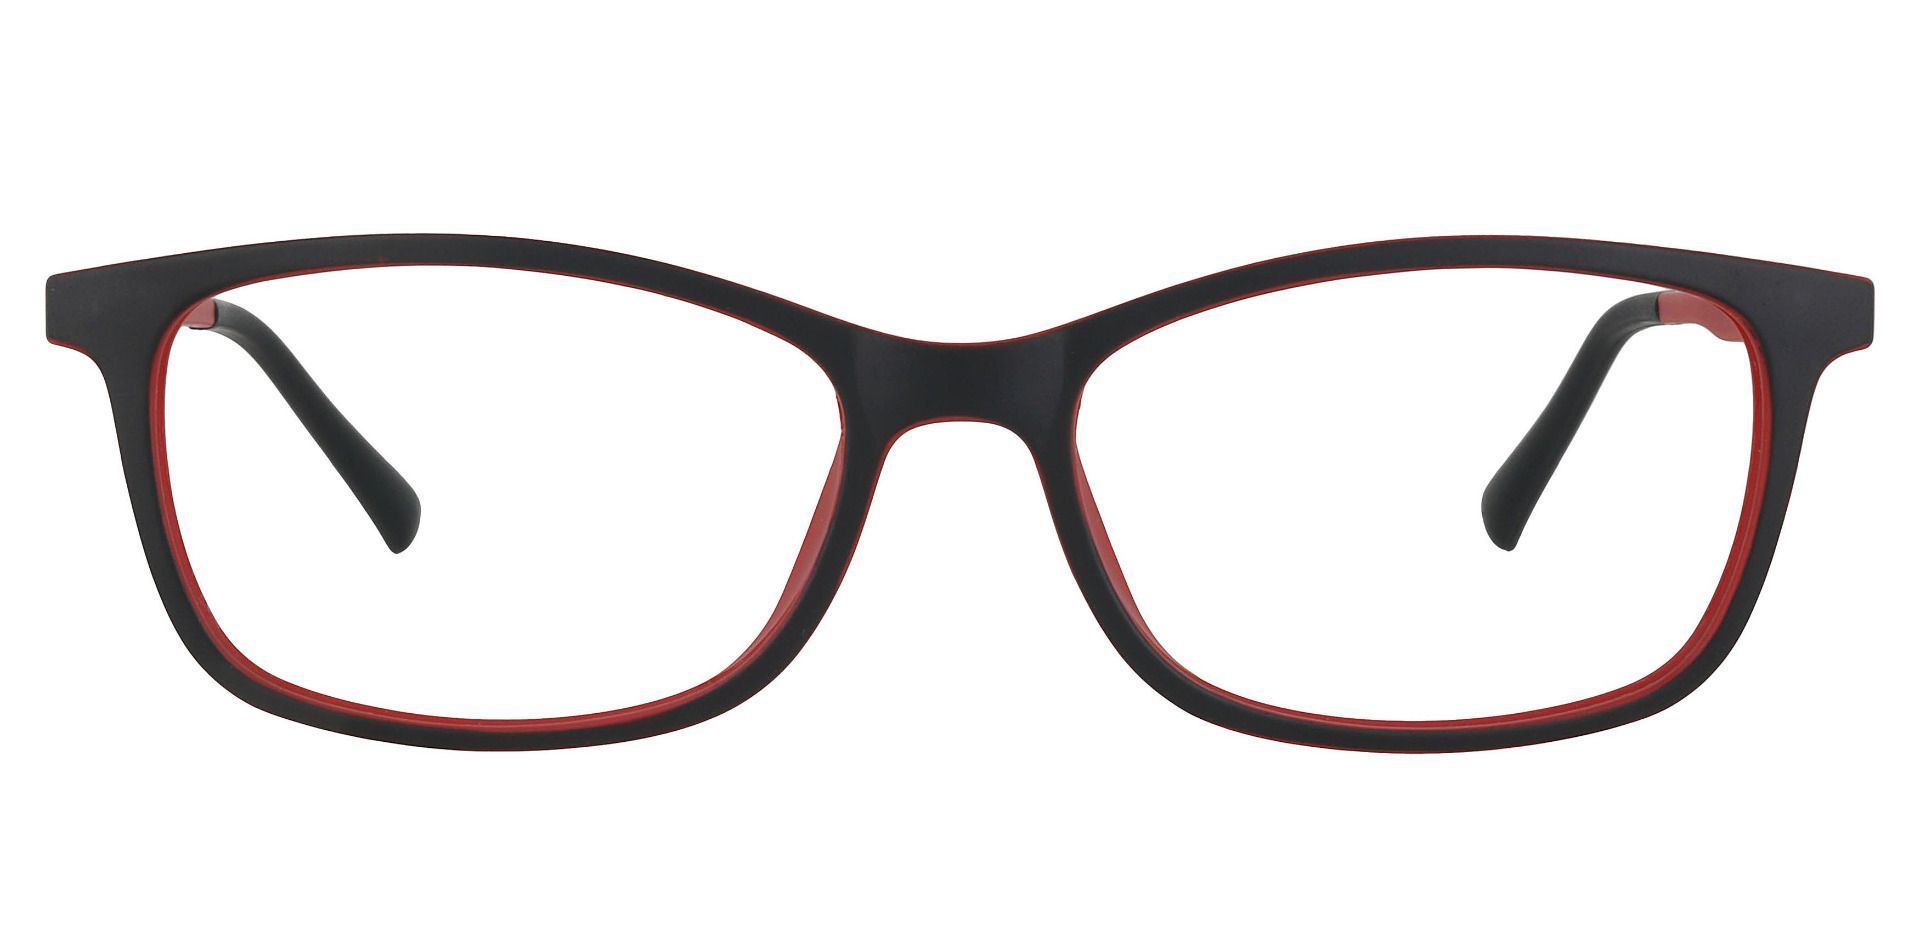 Segura Oval Eyeglasses Frame - Red